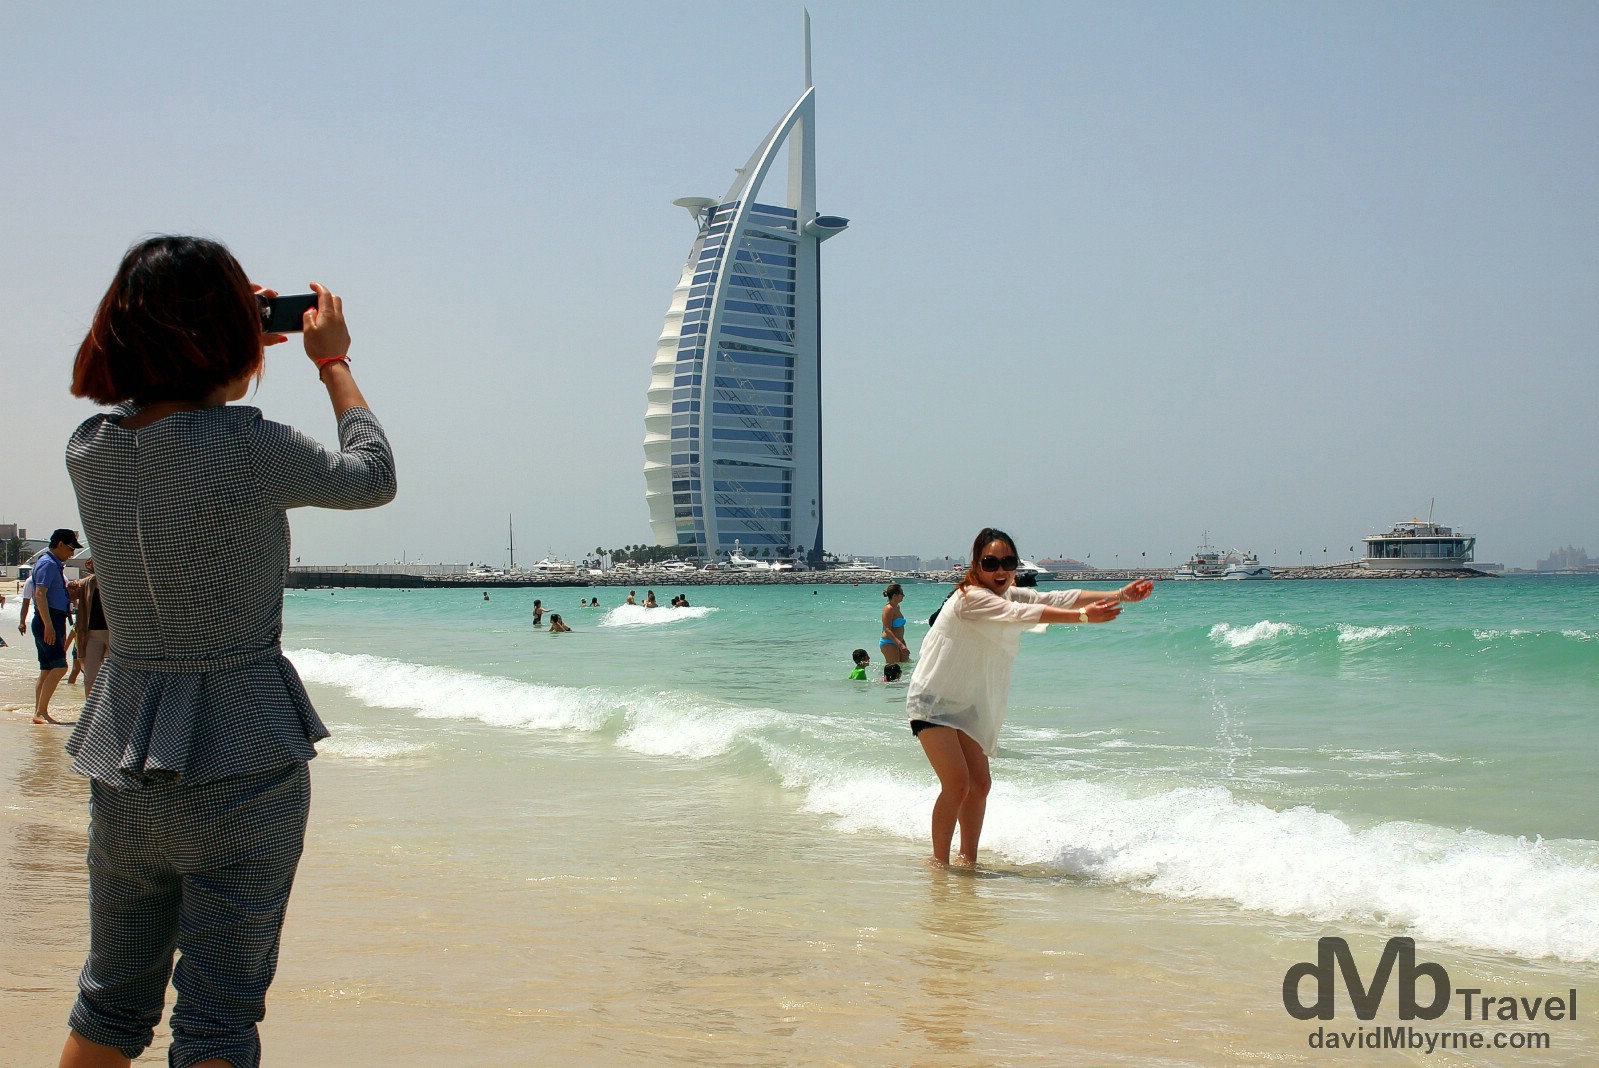 Pictures in front of the 7-star Burj Al Arab from Jumeirah Beach Park, Dubai, UAE. April 14th, 2014.